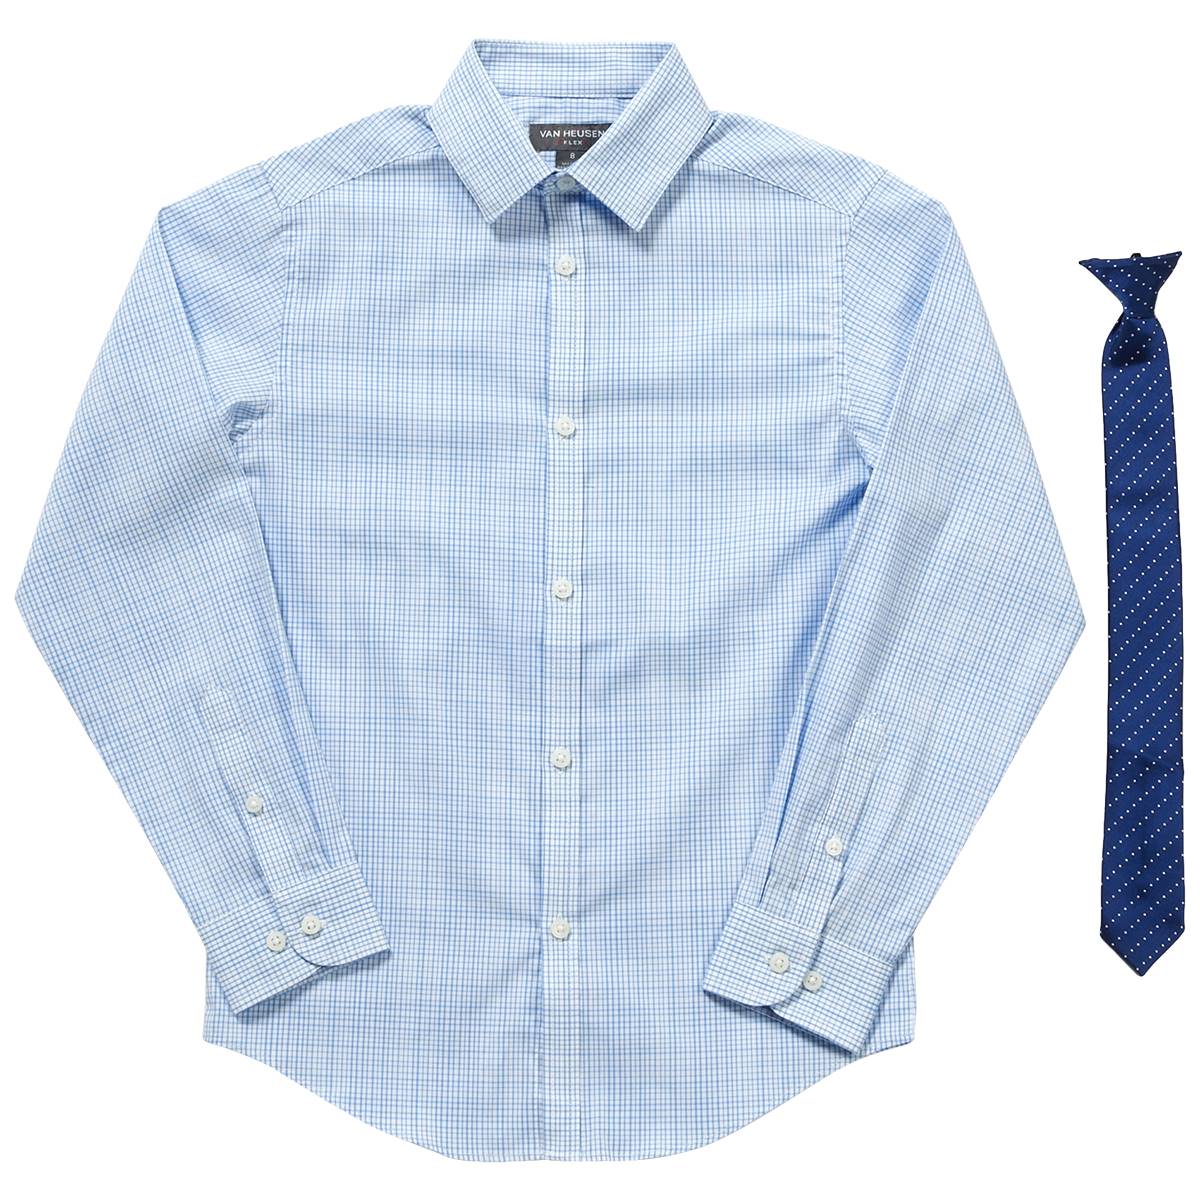 Boys (8-20) Van Heusen(R) Varigate Shirt & Tie Set - Azure